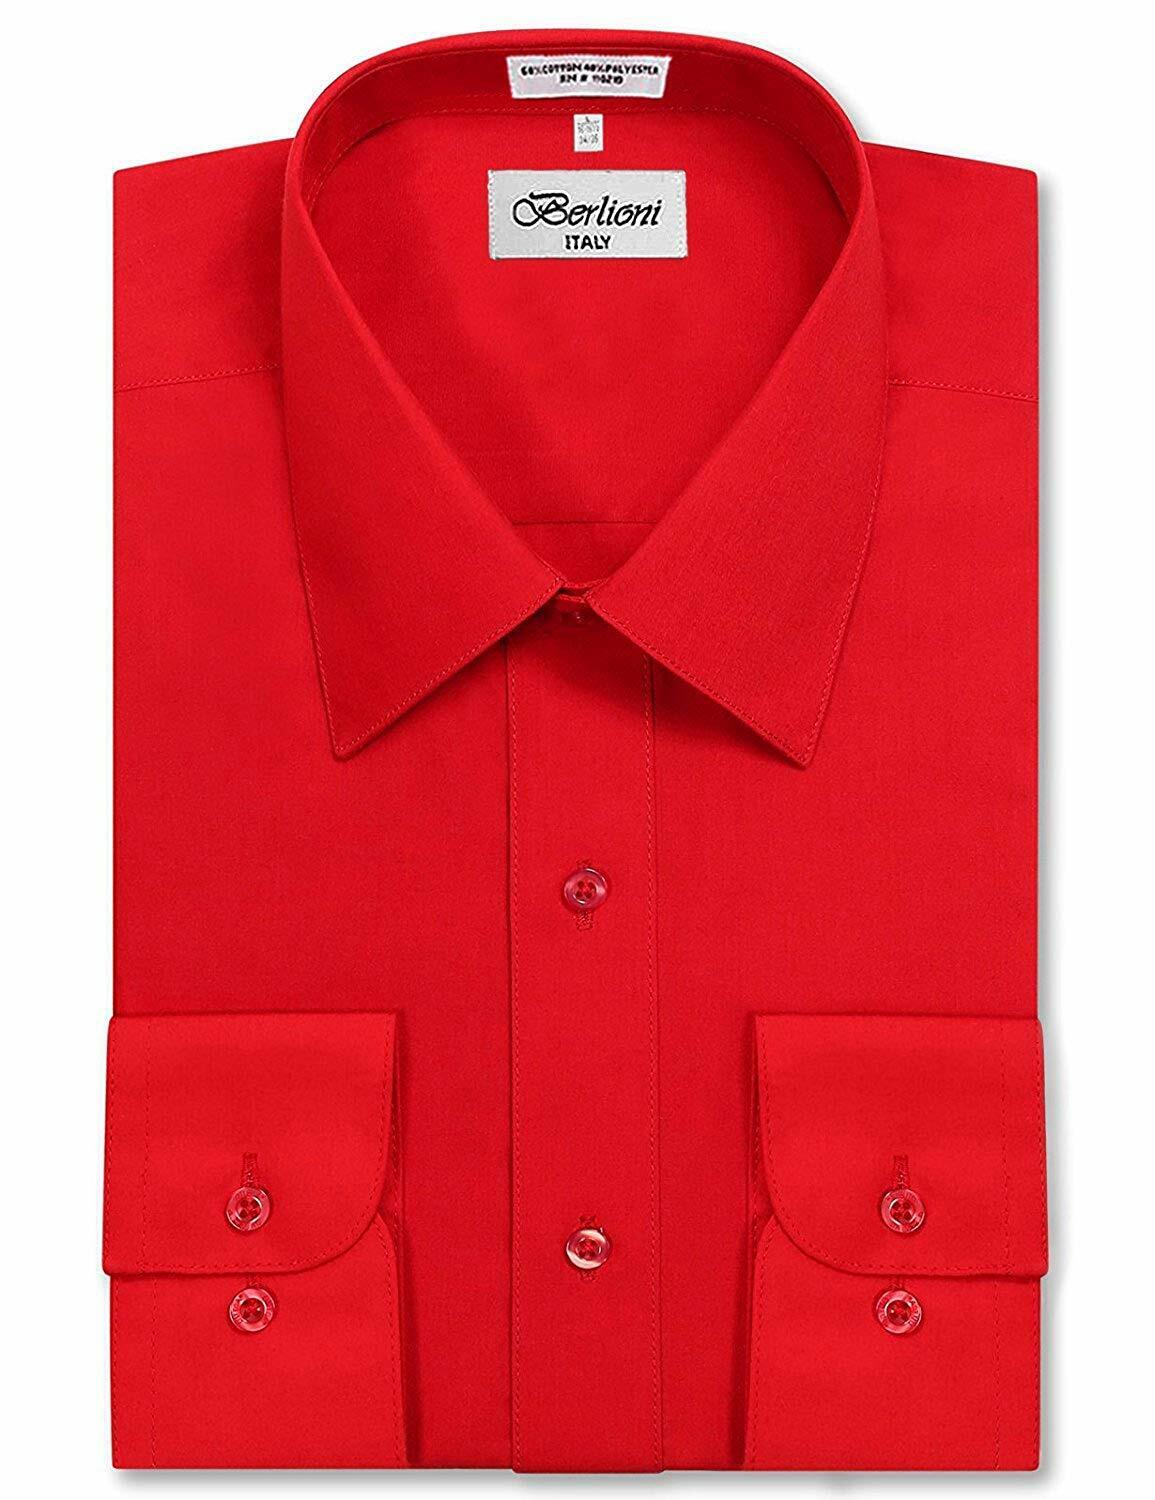 Berlioni Italy Men's Premium Classic French Convertible Cuff Solid Dress Shirt